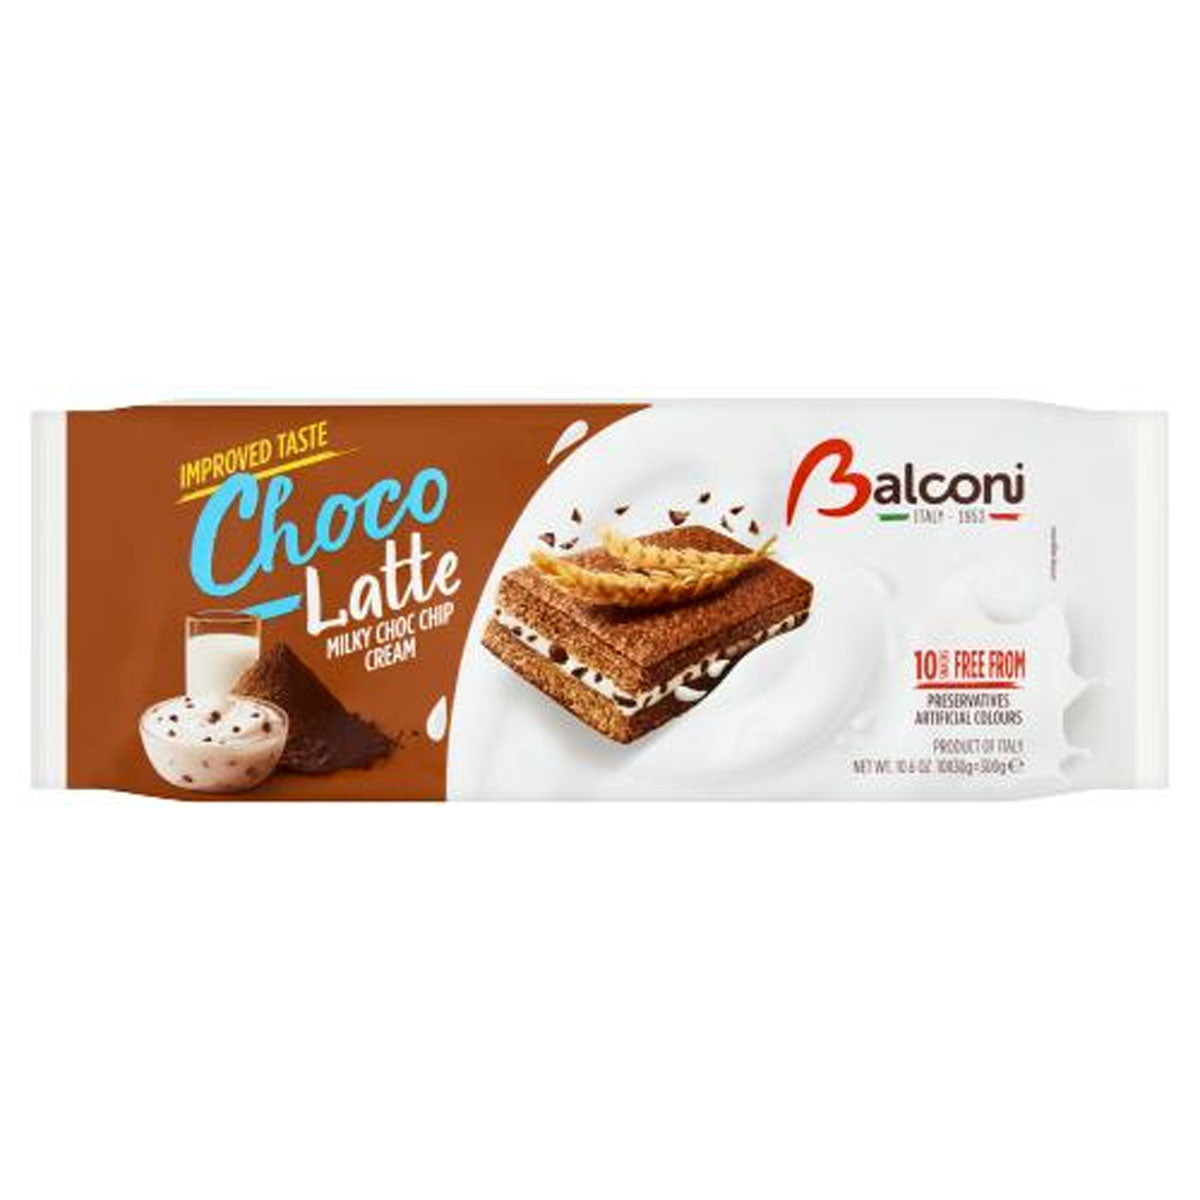 Balconi - Choco Latte Milky Choc Chip Cream - 10 x 30g (300g) - Continental Food Store